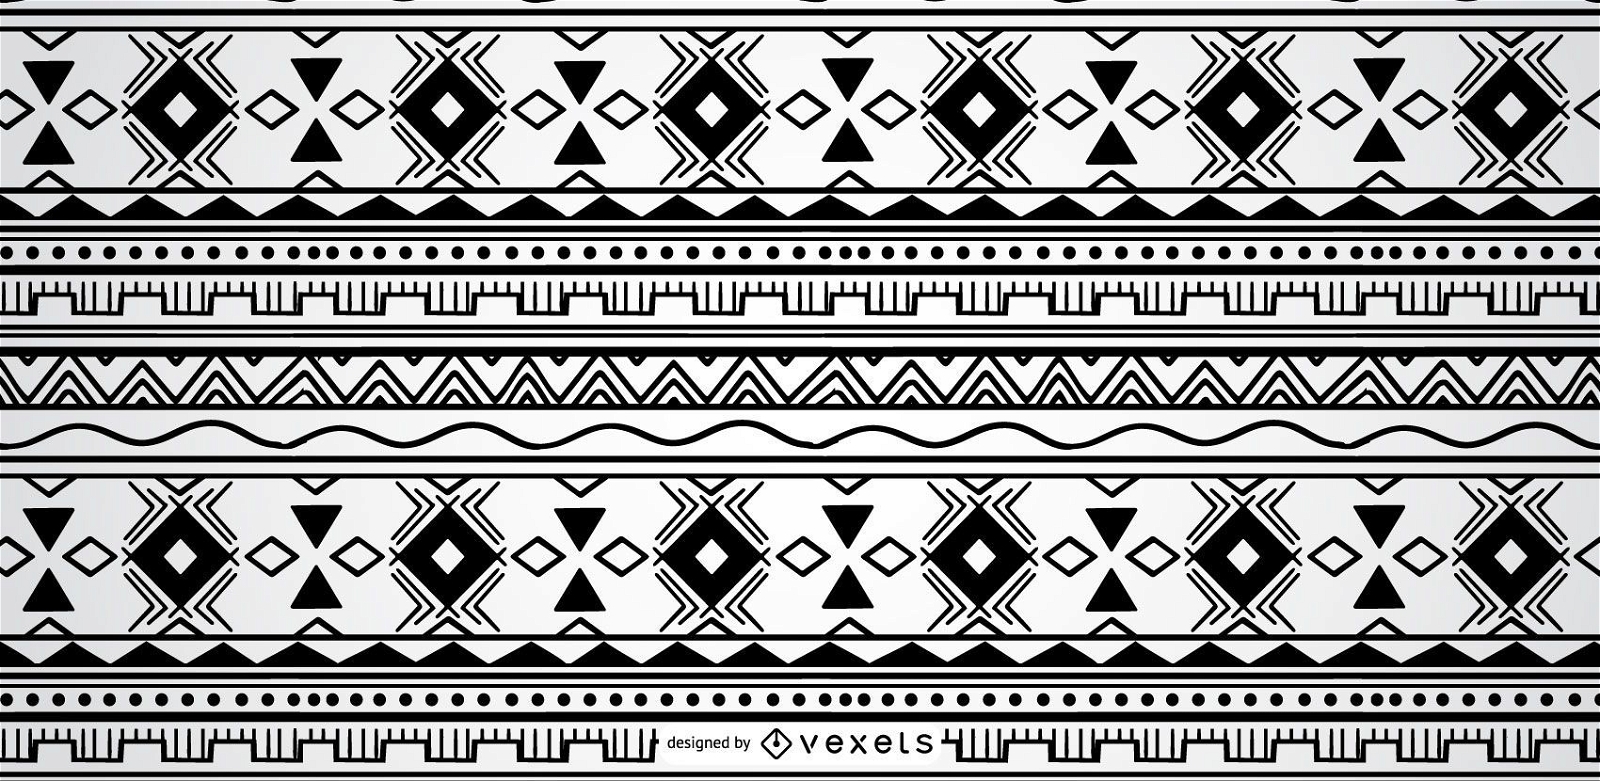 Geometric Aztec Pattern Design Vector Download